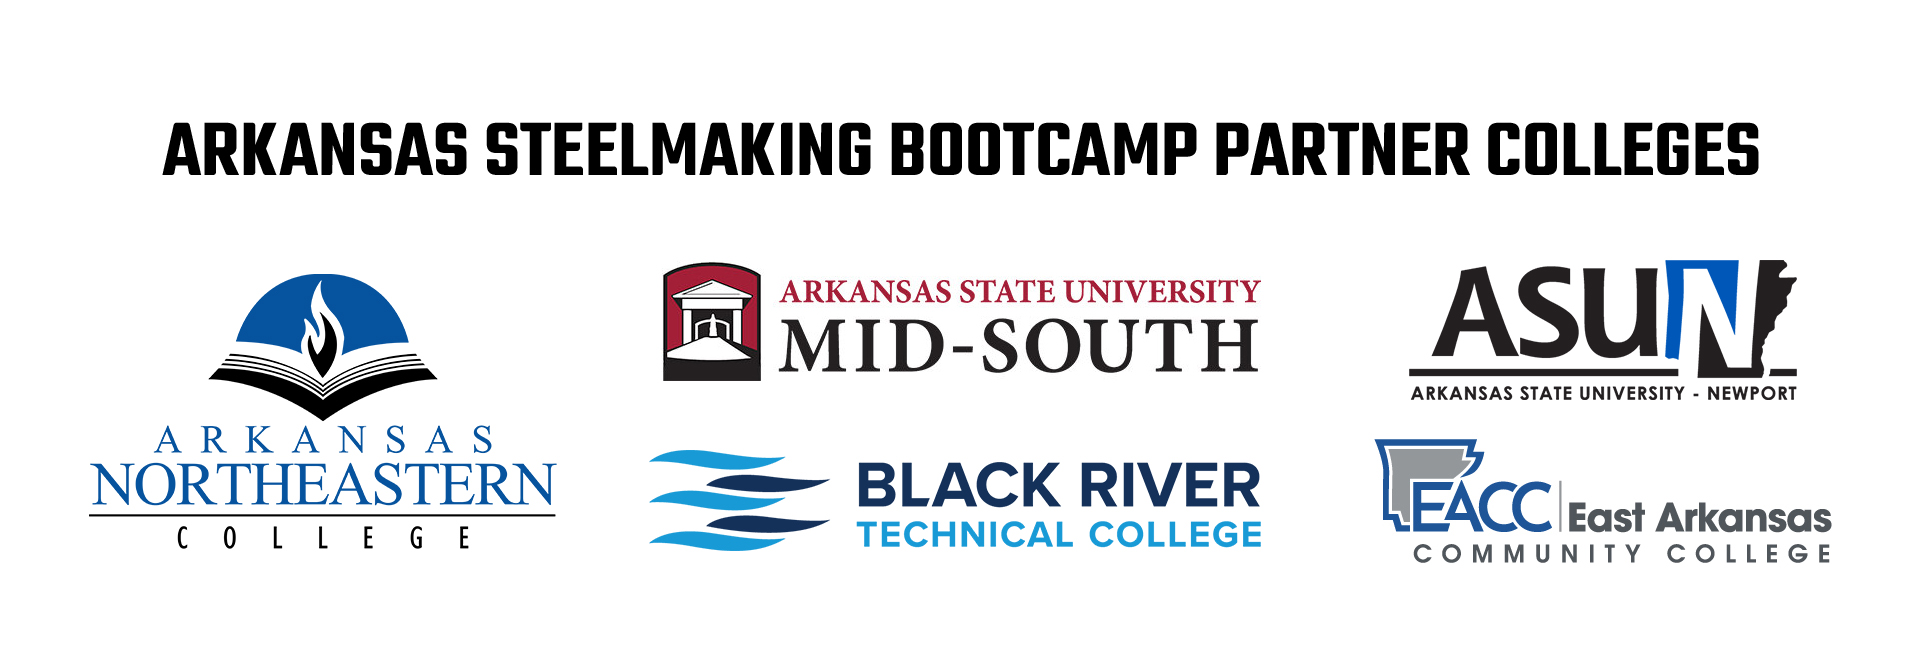 AR Steelmaking Bootcamp Partner Colleges